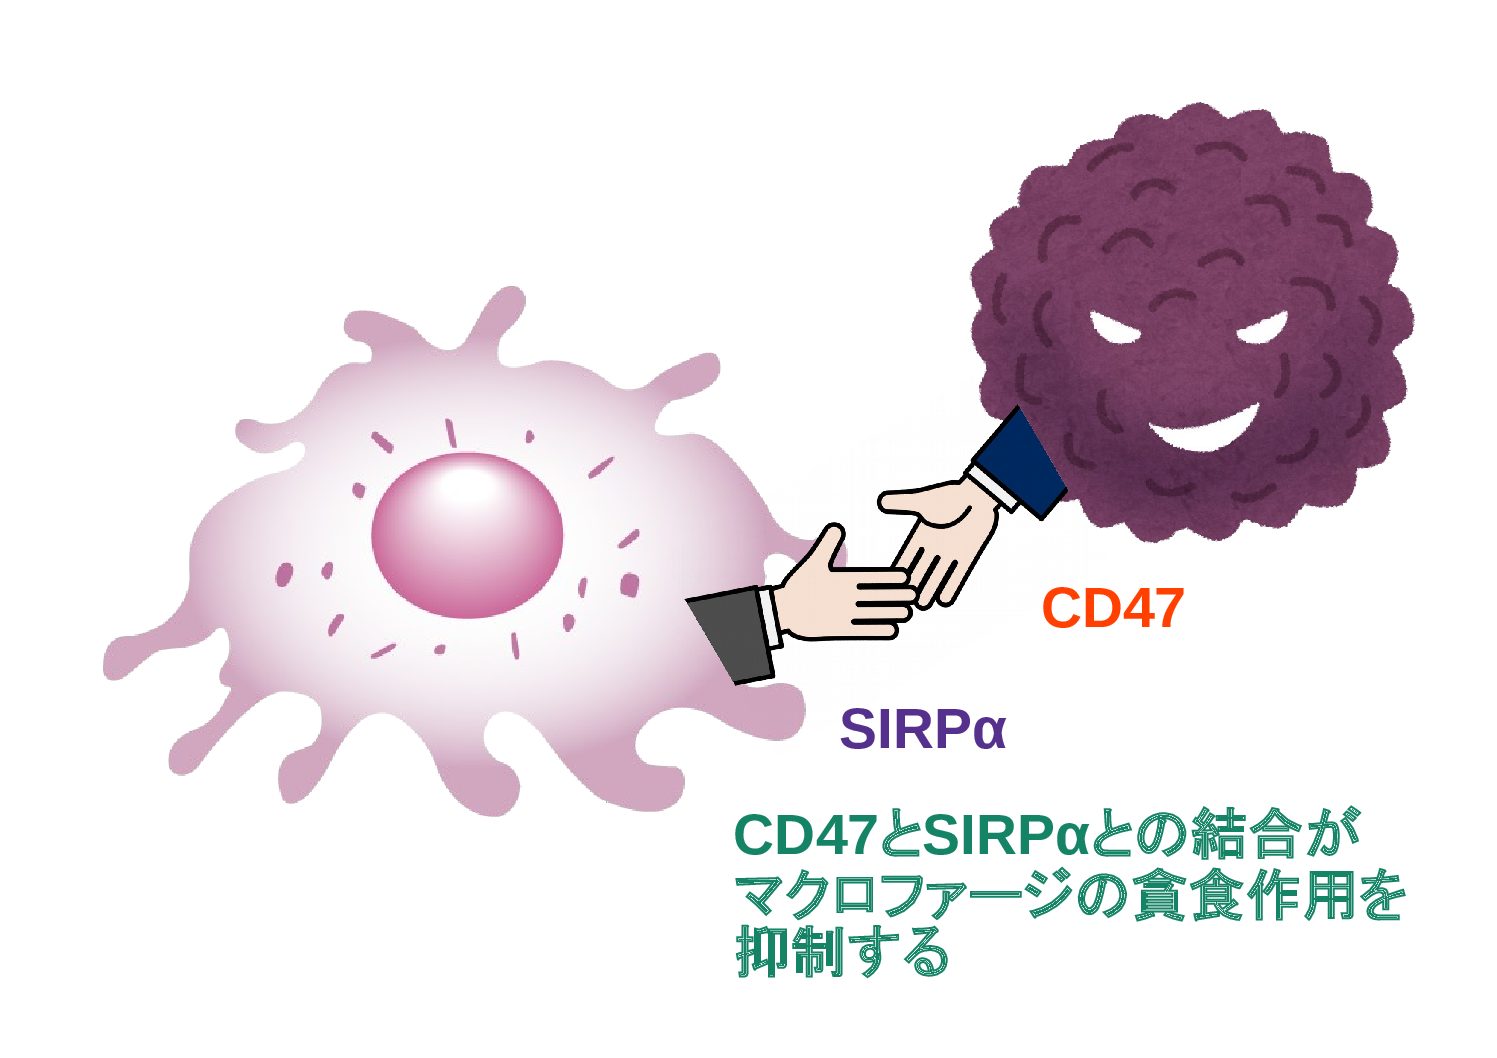 CD47とSIRPαとの結合がマクロファージの貧食作用を抑制する